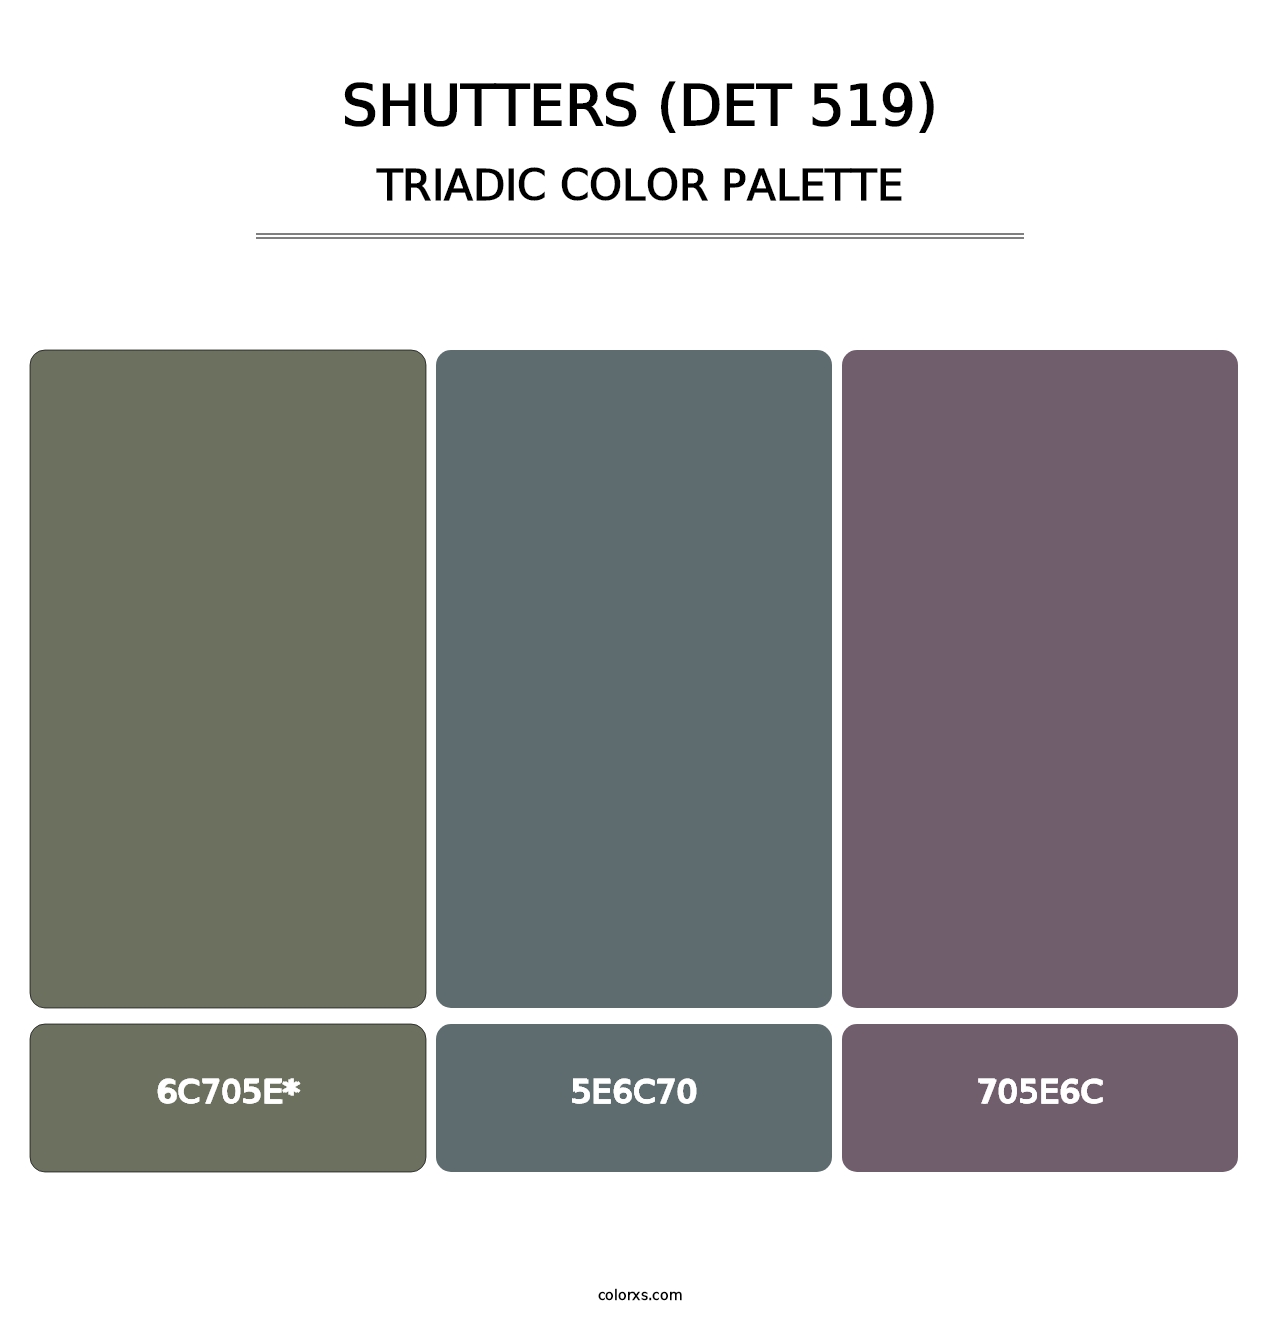 Shutters (DET 519) - Triadic Color Palette